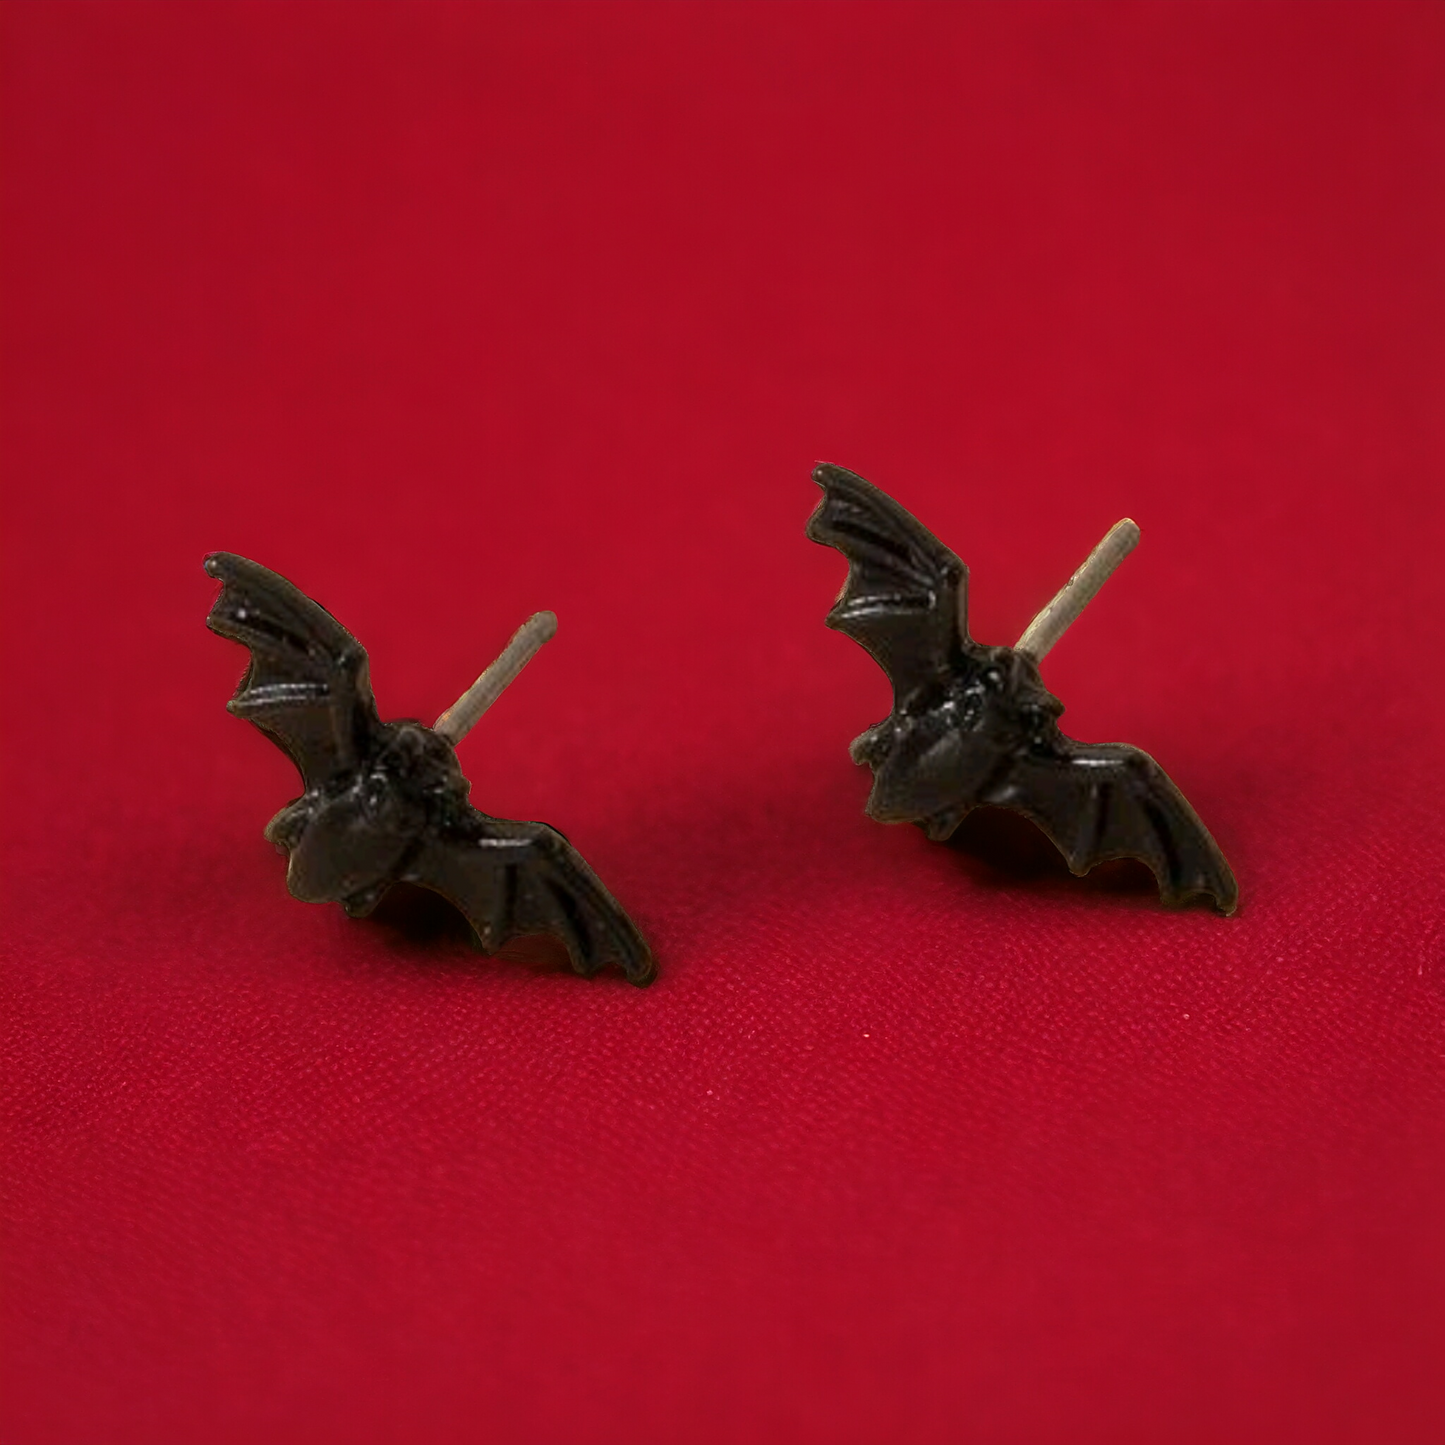 Bat earring studs